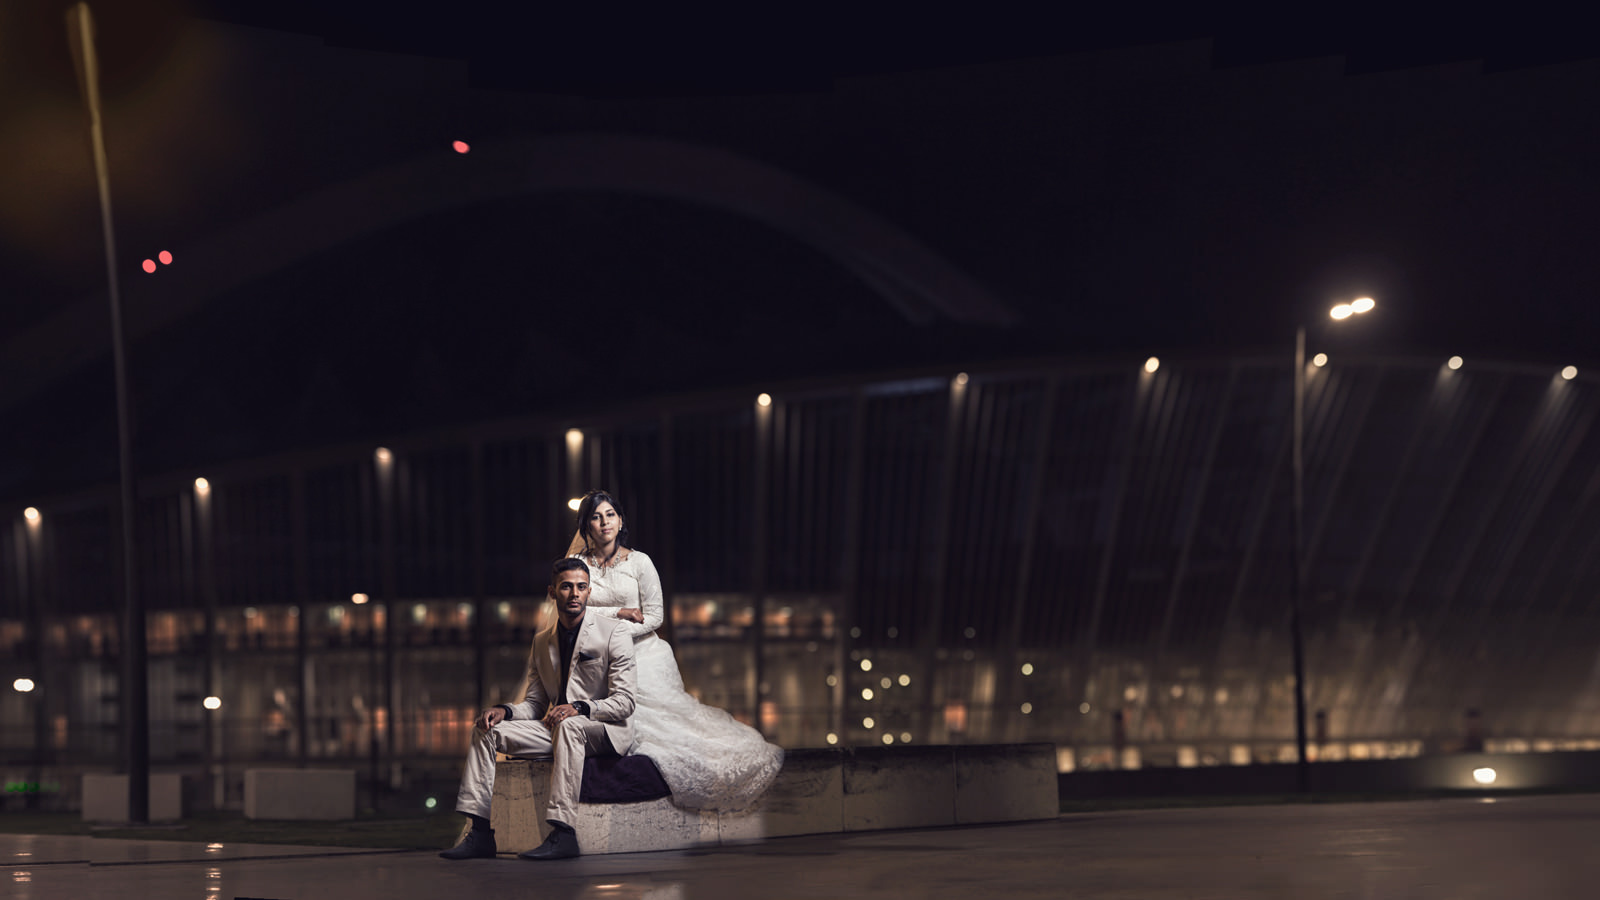 Reservoir hills islamic centre muslim bride and groom moses mabhida portrait creative shoot